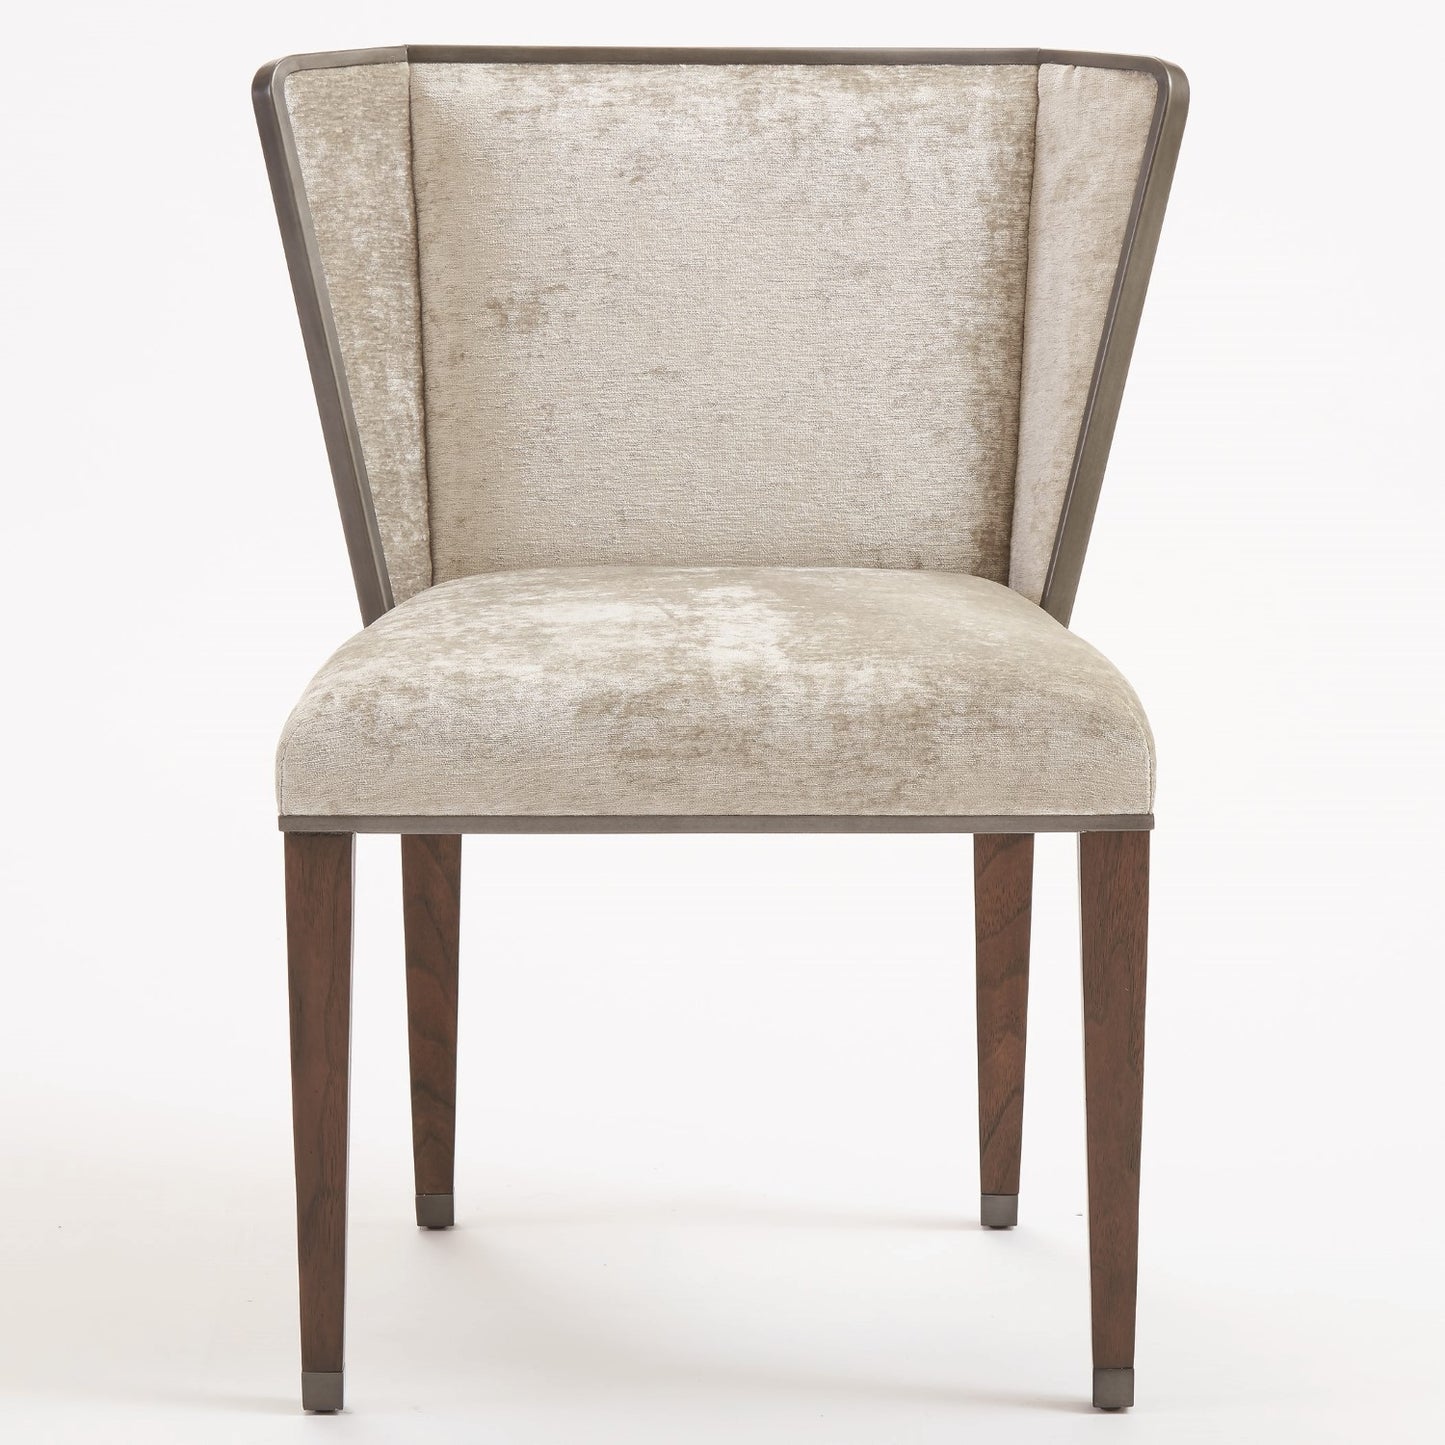 Argento Chair - Grats Decor Interior Design & Build Inc.